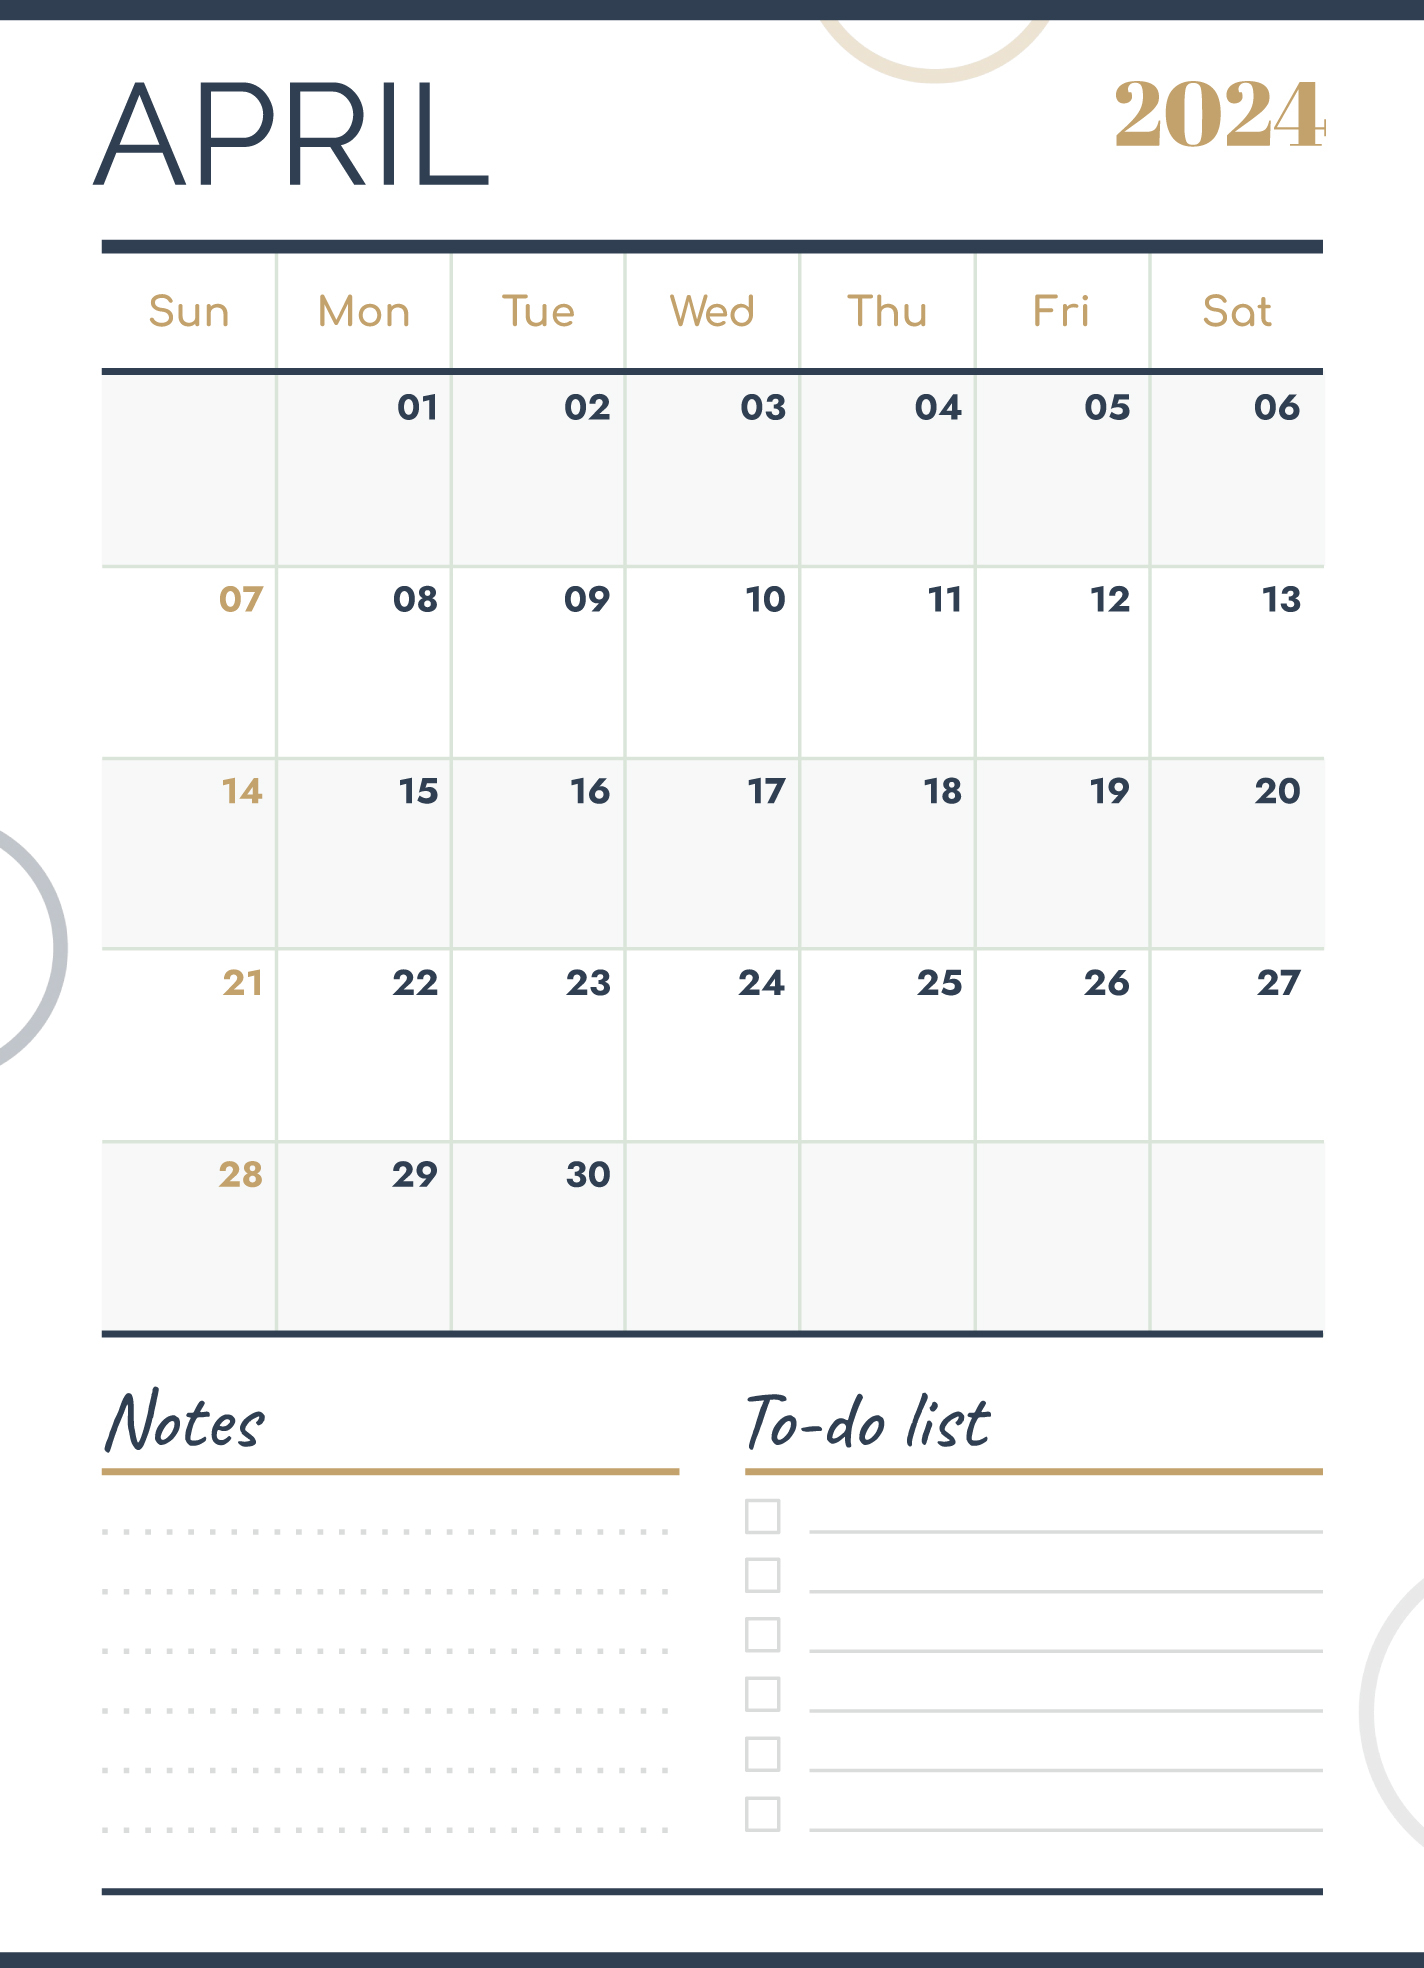 April 2024 Calendar Free Google Docs Template - Gdoc.io intended for Google Calendar April 2024